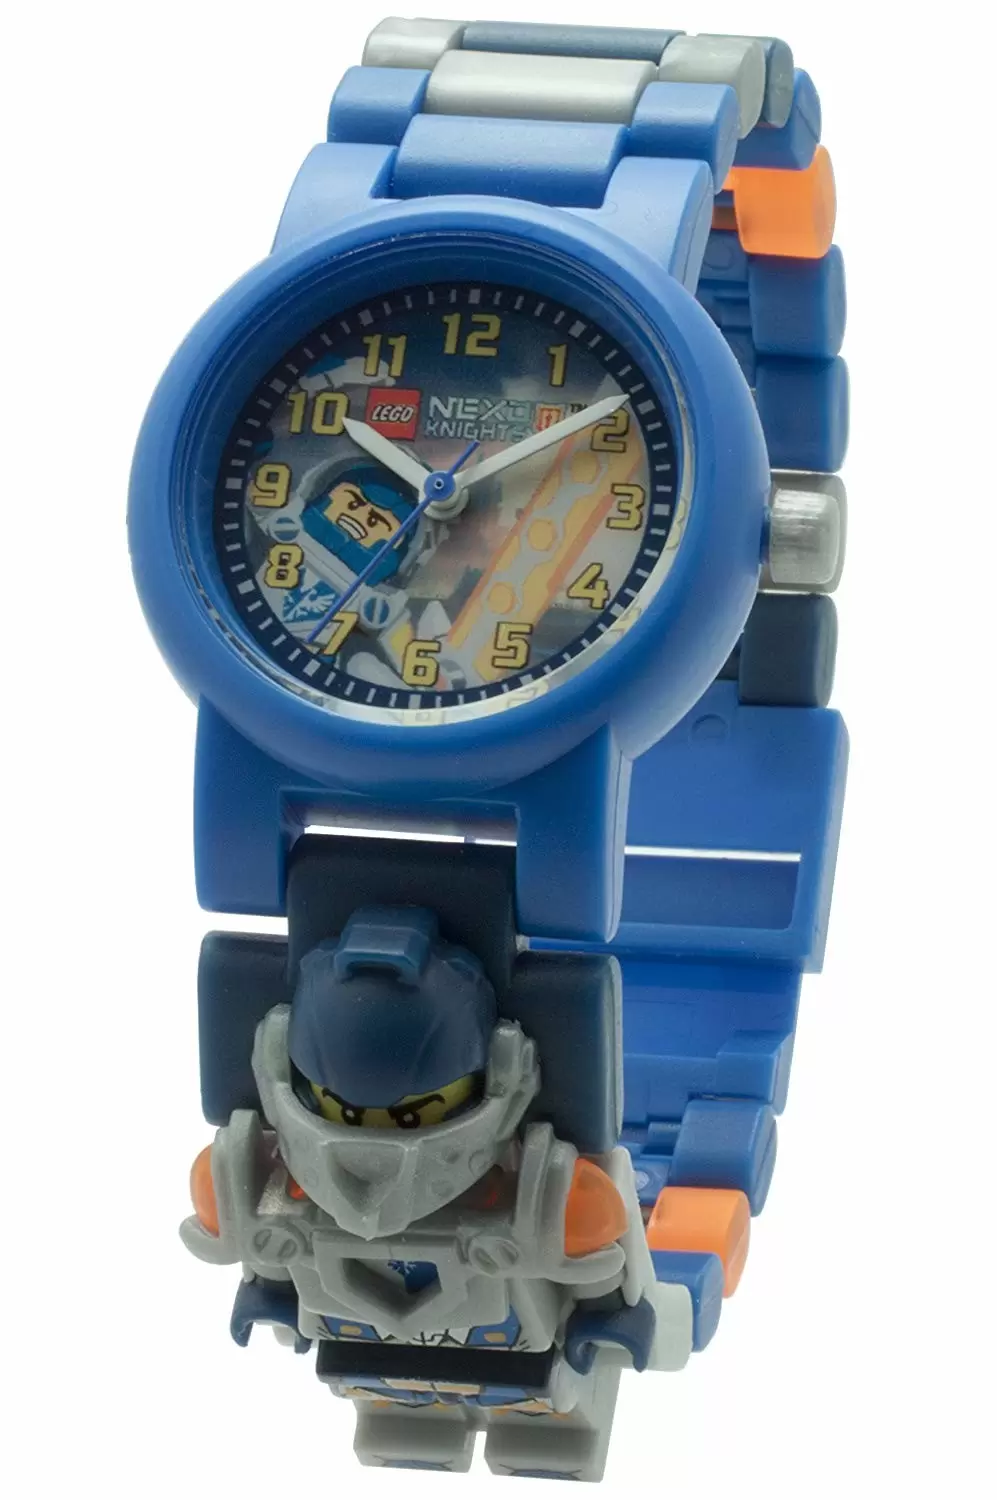 LEGO Watches - LEGO Nexo Knights Clay Watch